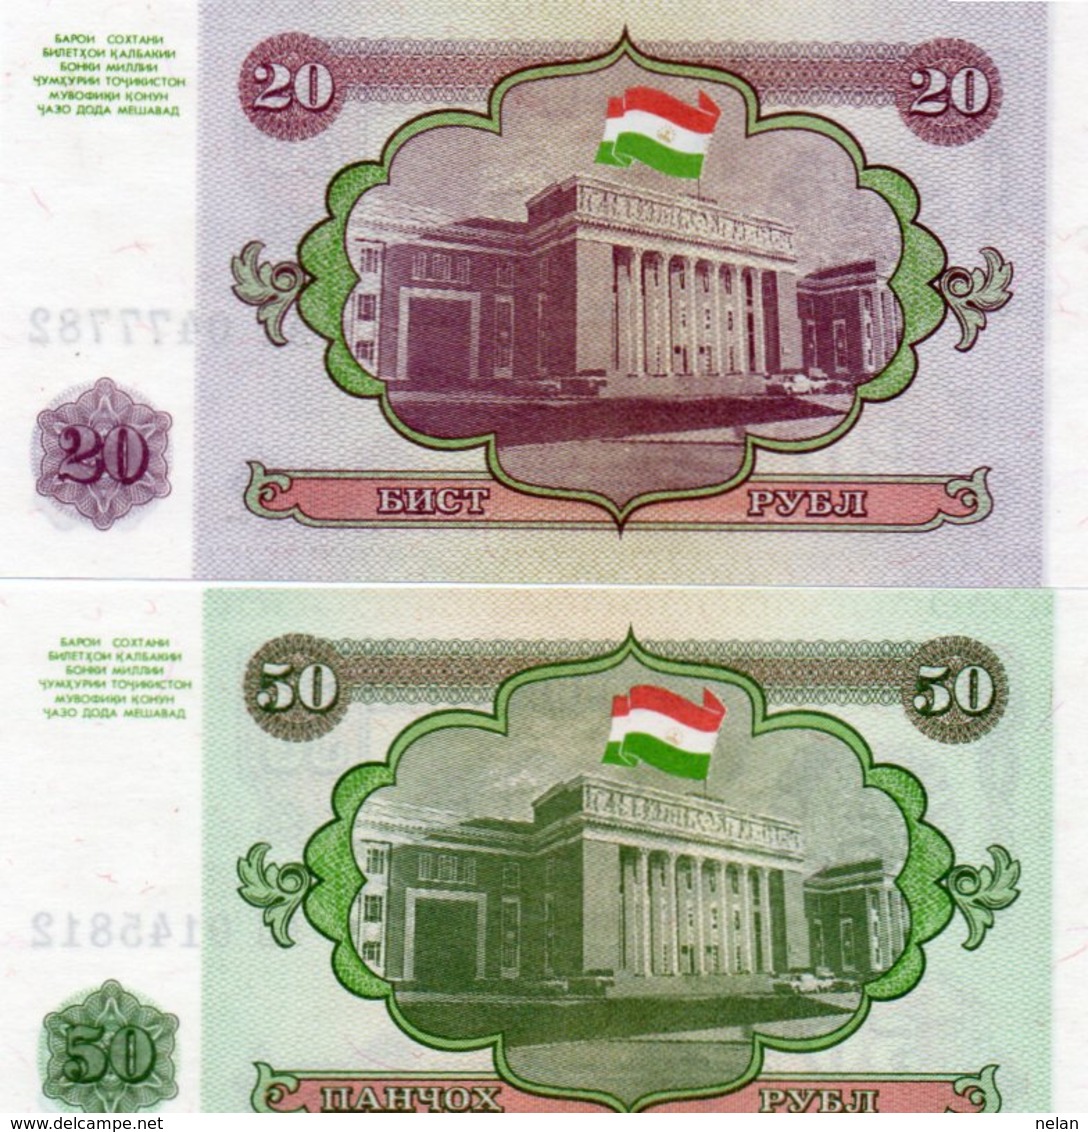 TAJIKISTAN 20,50 RUBLES 1994 P-4a,5a  UNC - Tayikistán